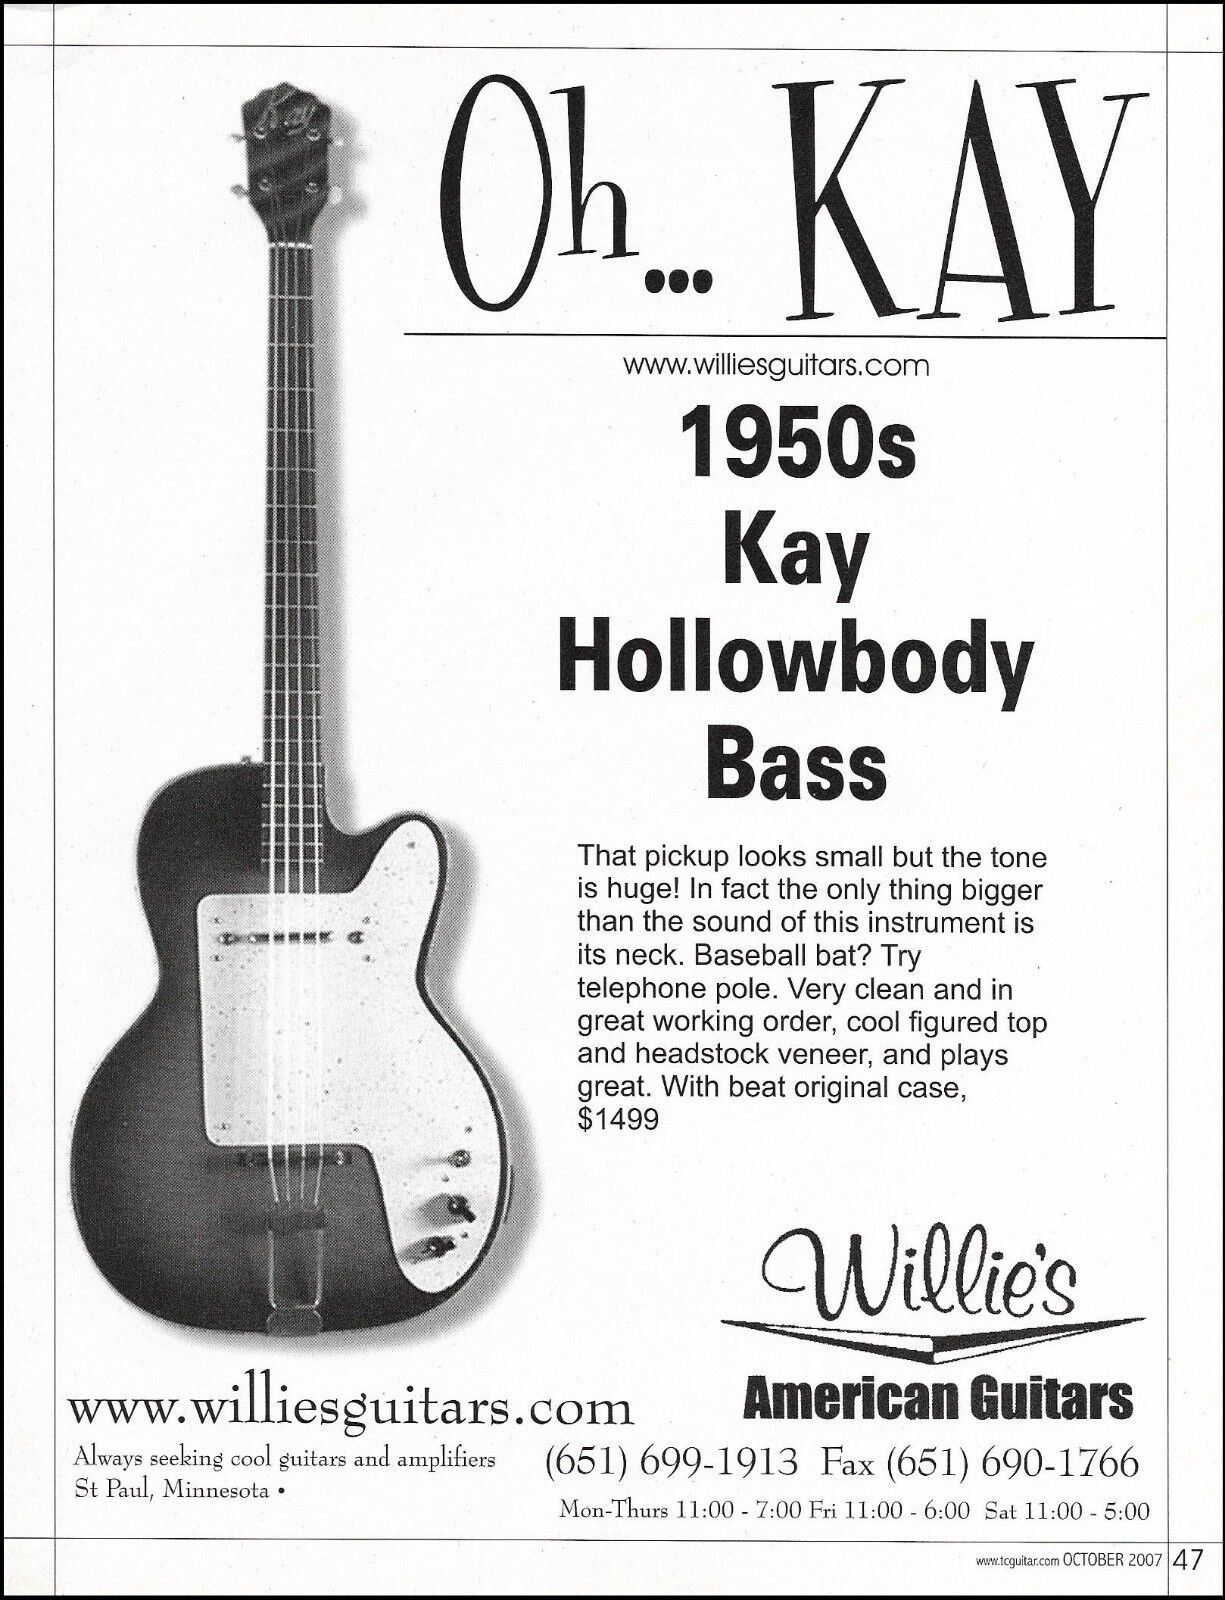 The 1950s Kay Hollowbody Bass guitar 2007 advertisement 8 x 11 ad print